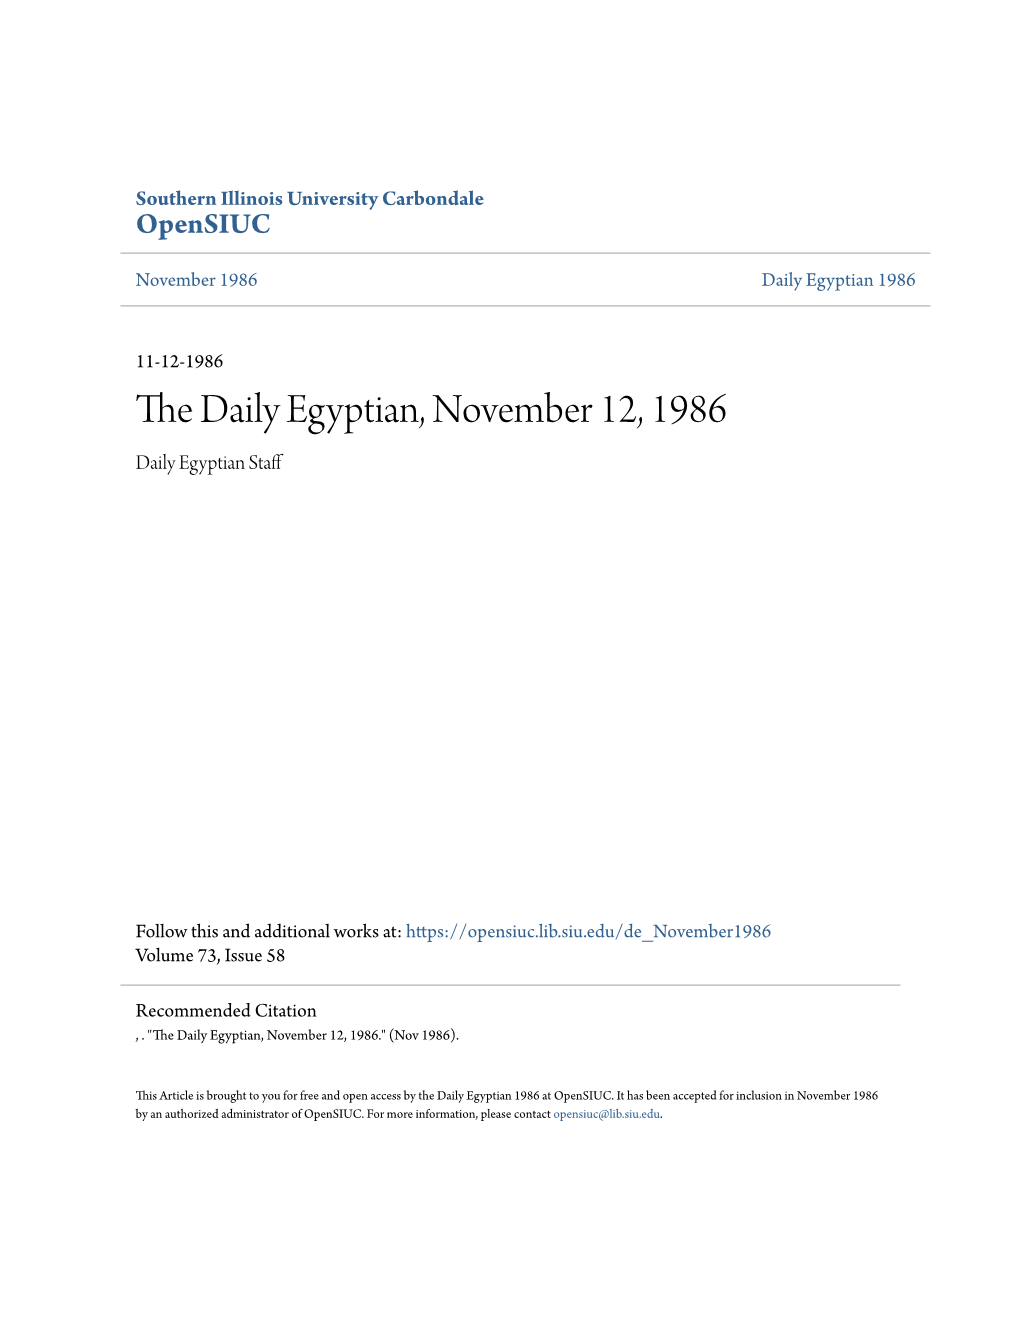 The Daily Egyptian, November 12, 1986